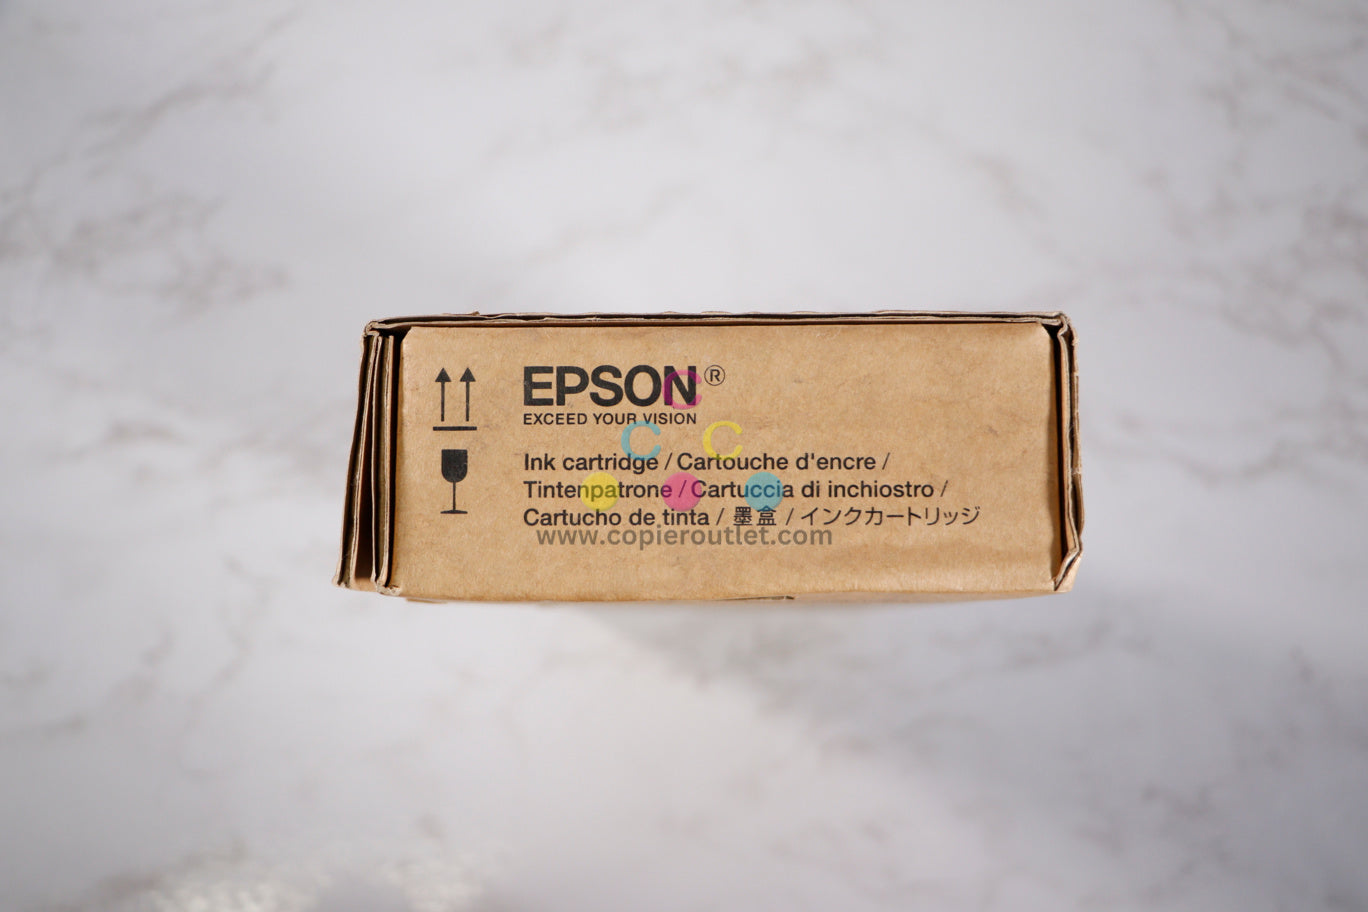 New OEM Epson SC-P9000,SC-P7000 Orange Ink Cartridge T804A Same Day Shipping